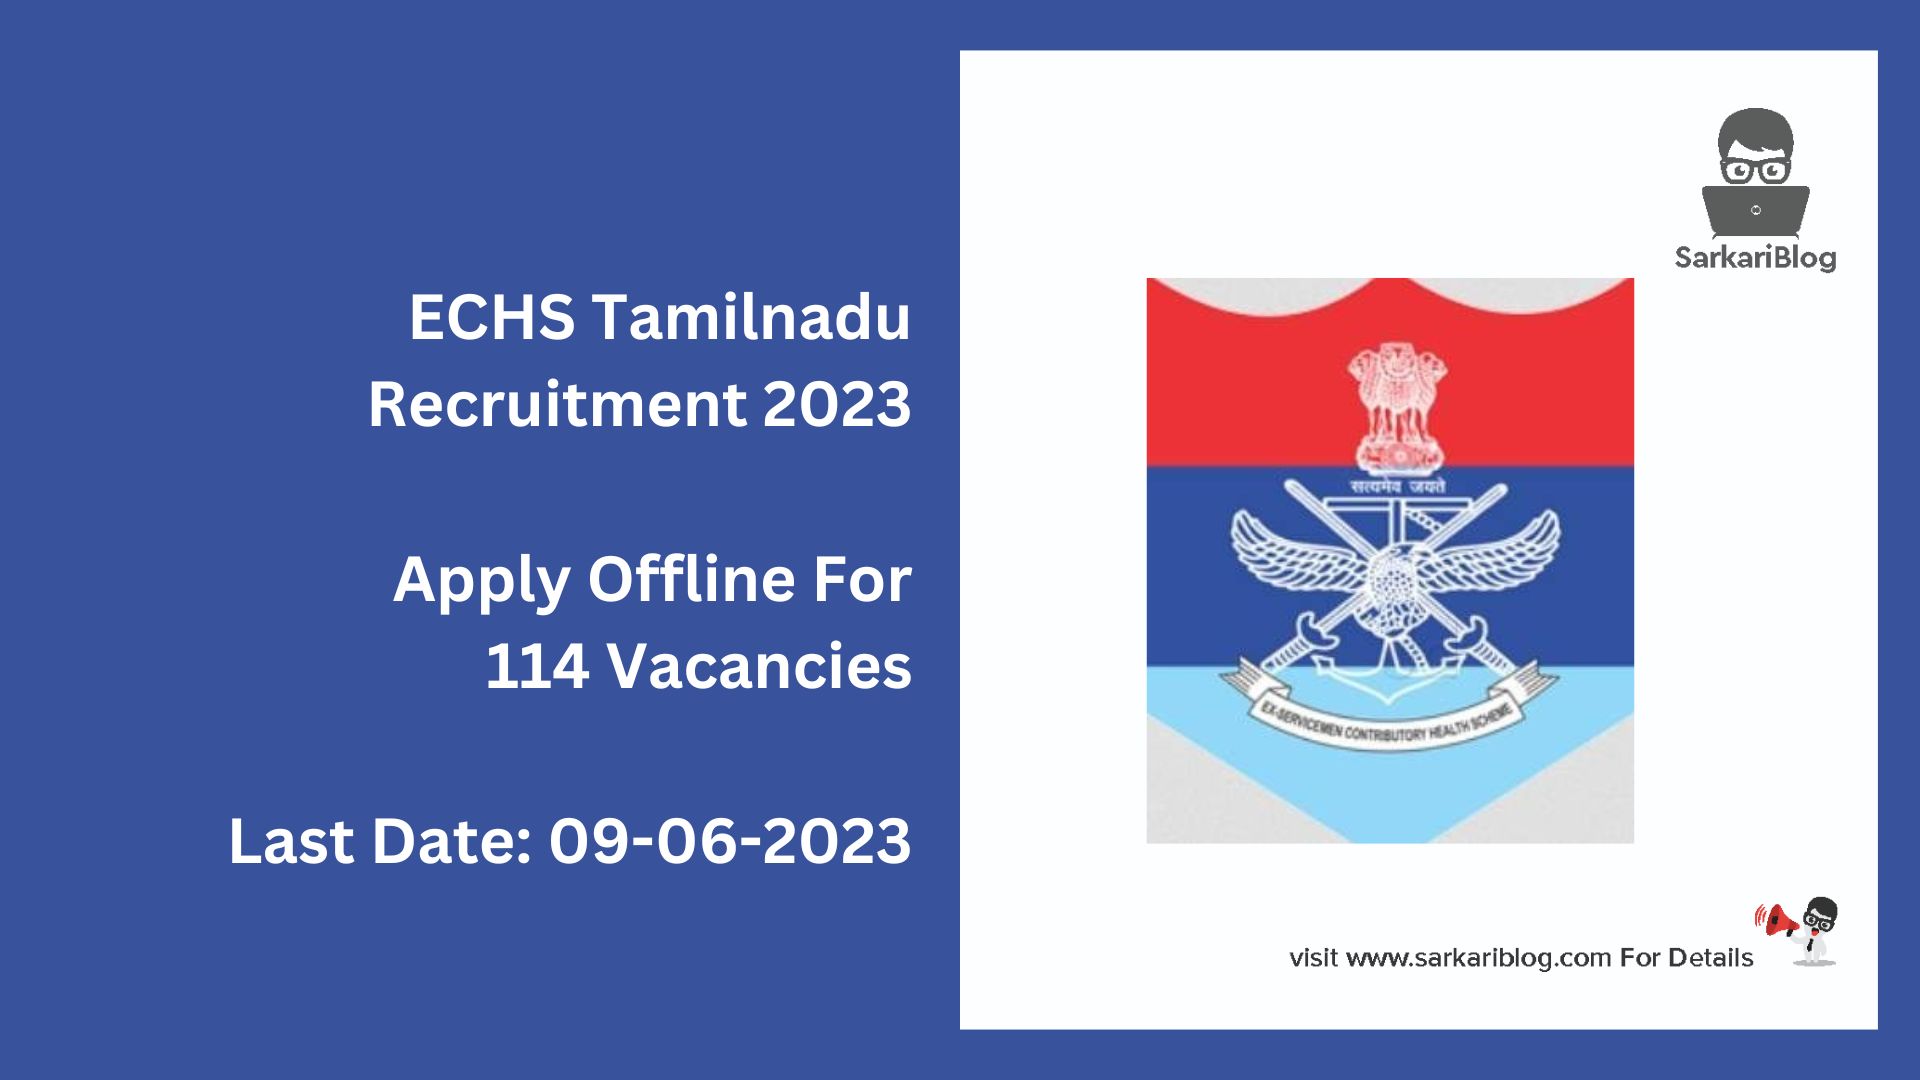 ECHS Tamilnadu Recruitment 2023